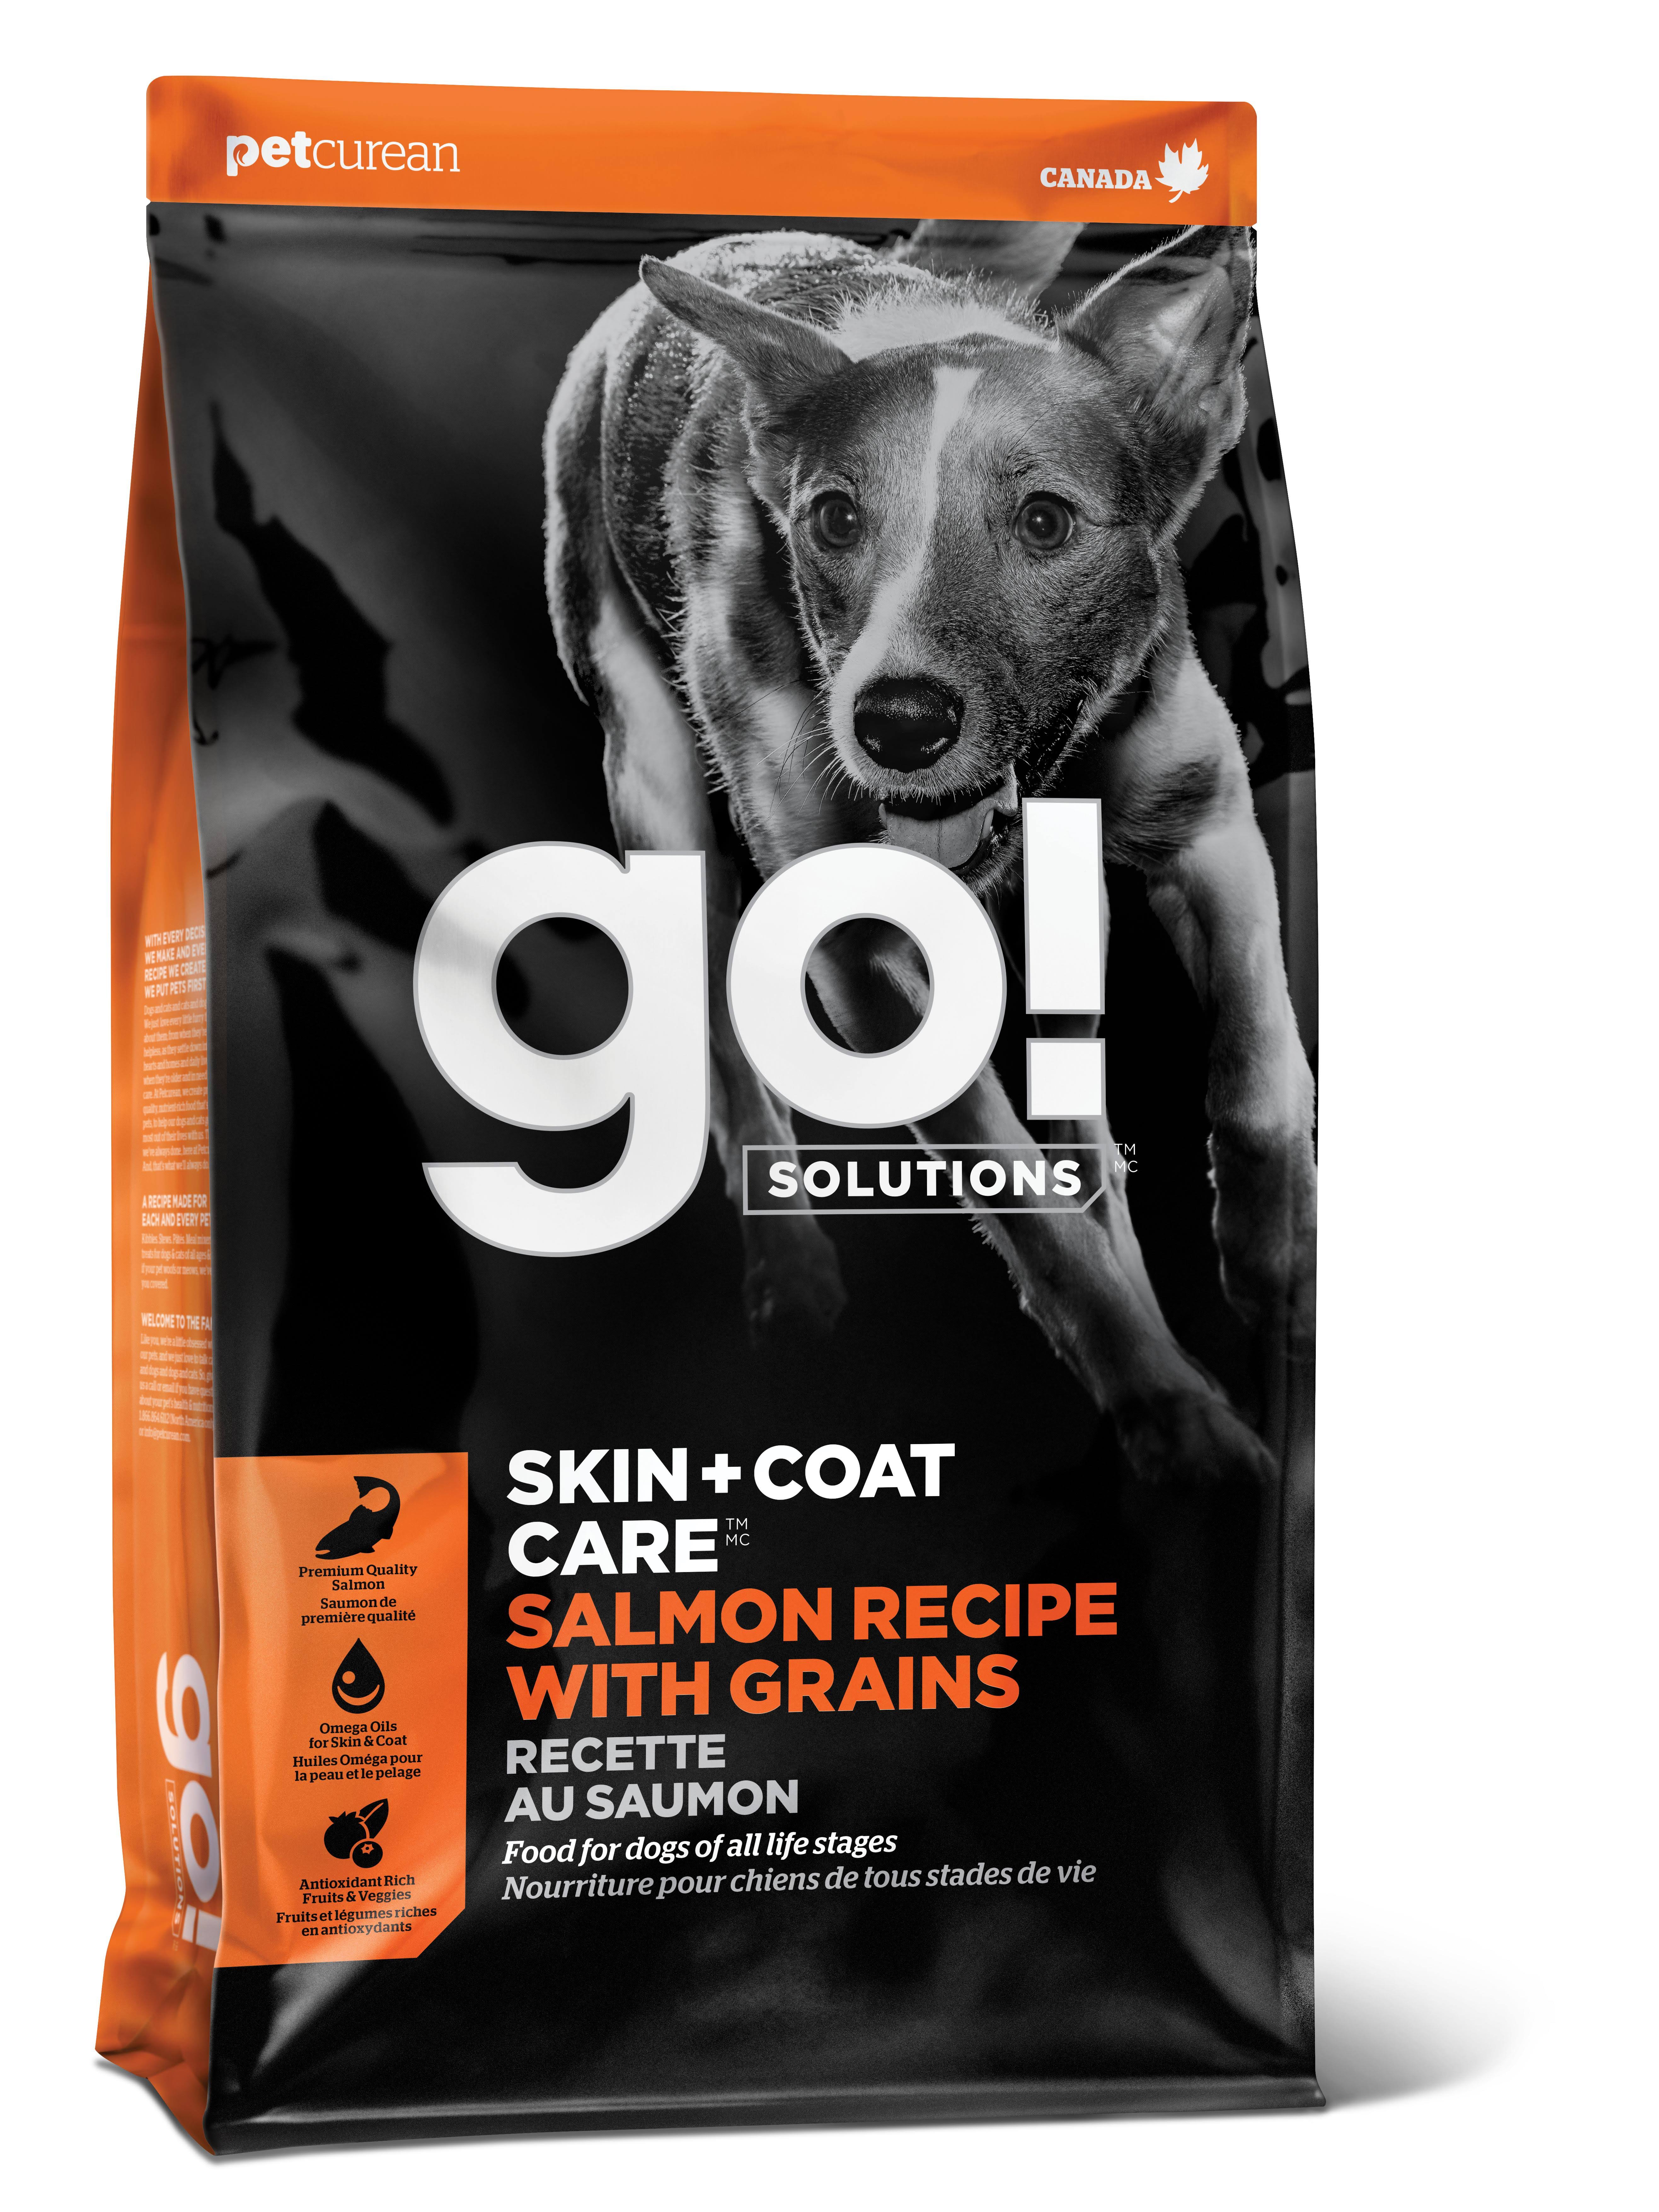 Petcurean Go! Solutions Skin + Coat Care Dry Dog Food - Salmon Recipe - 3.5 LB Bag